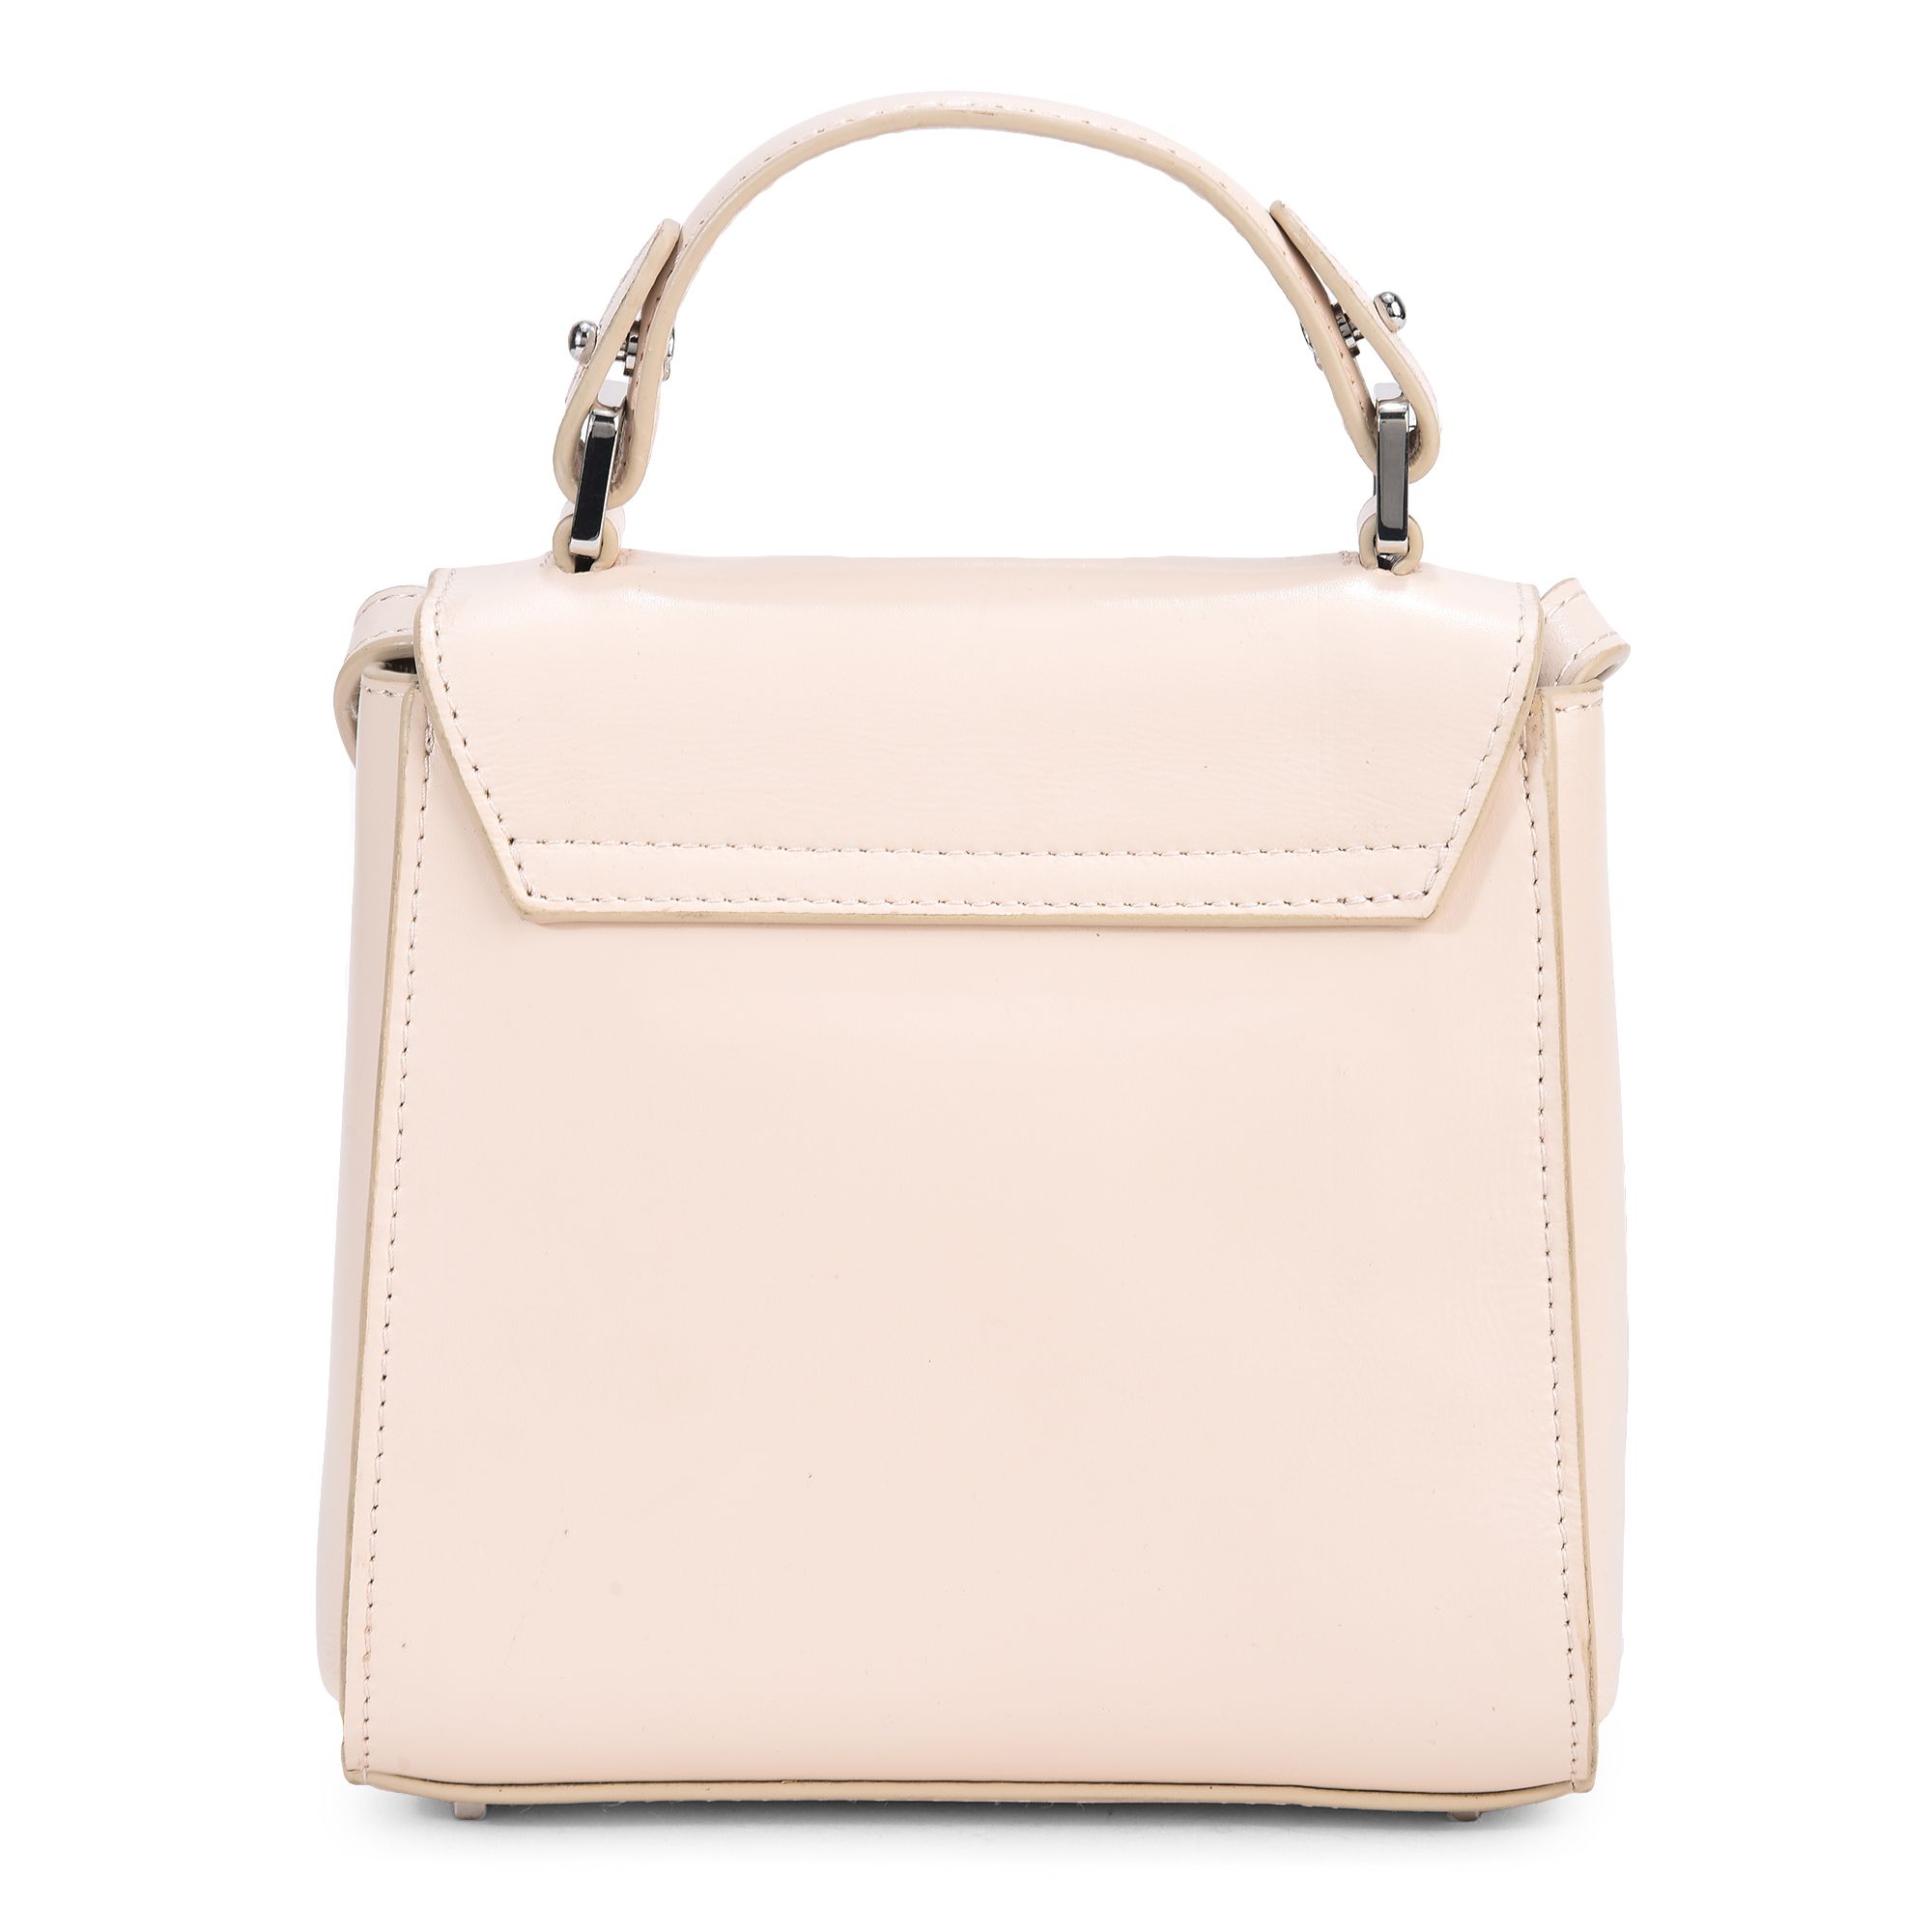 Peach satchel bag for women